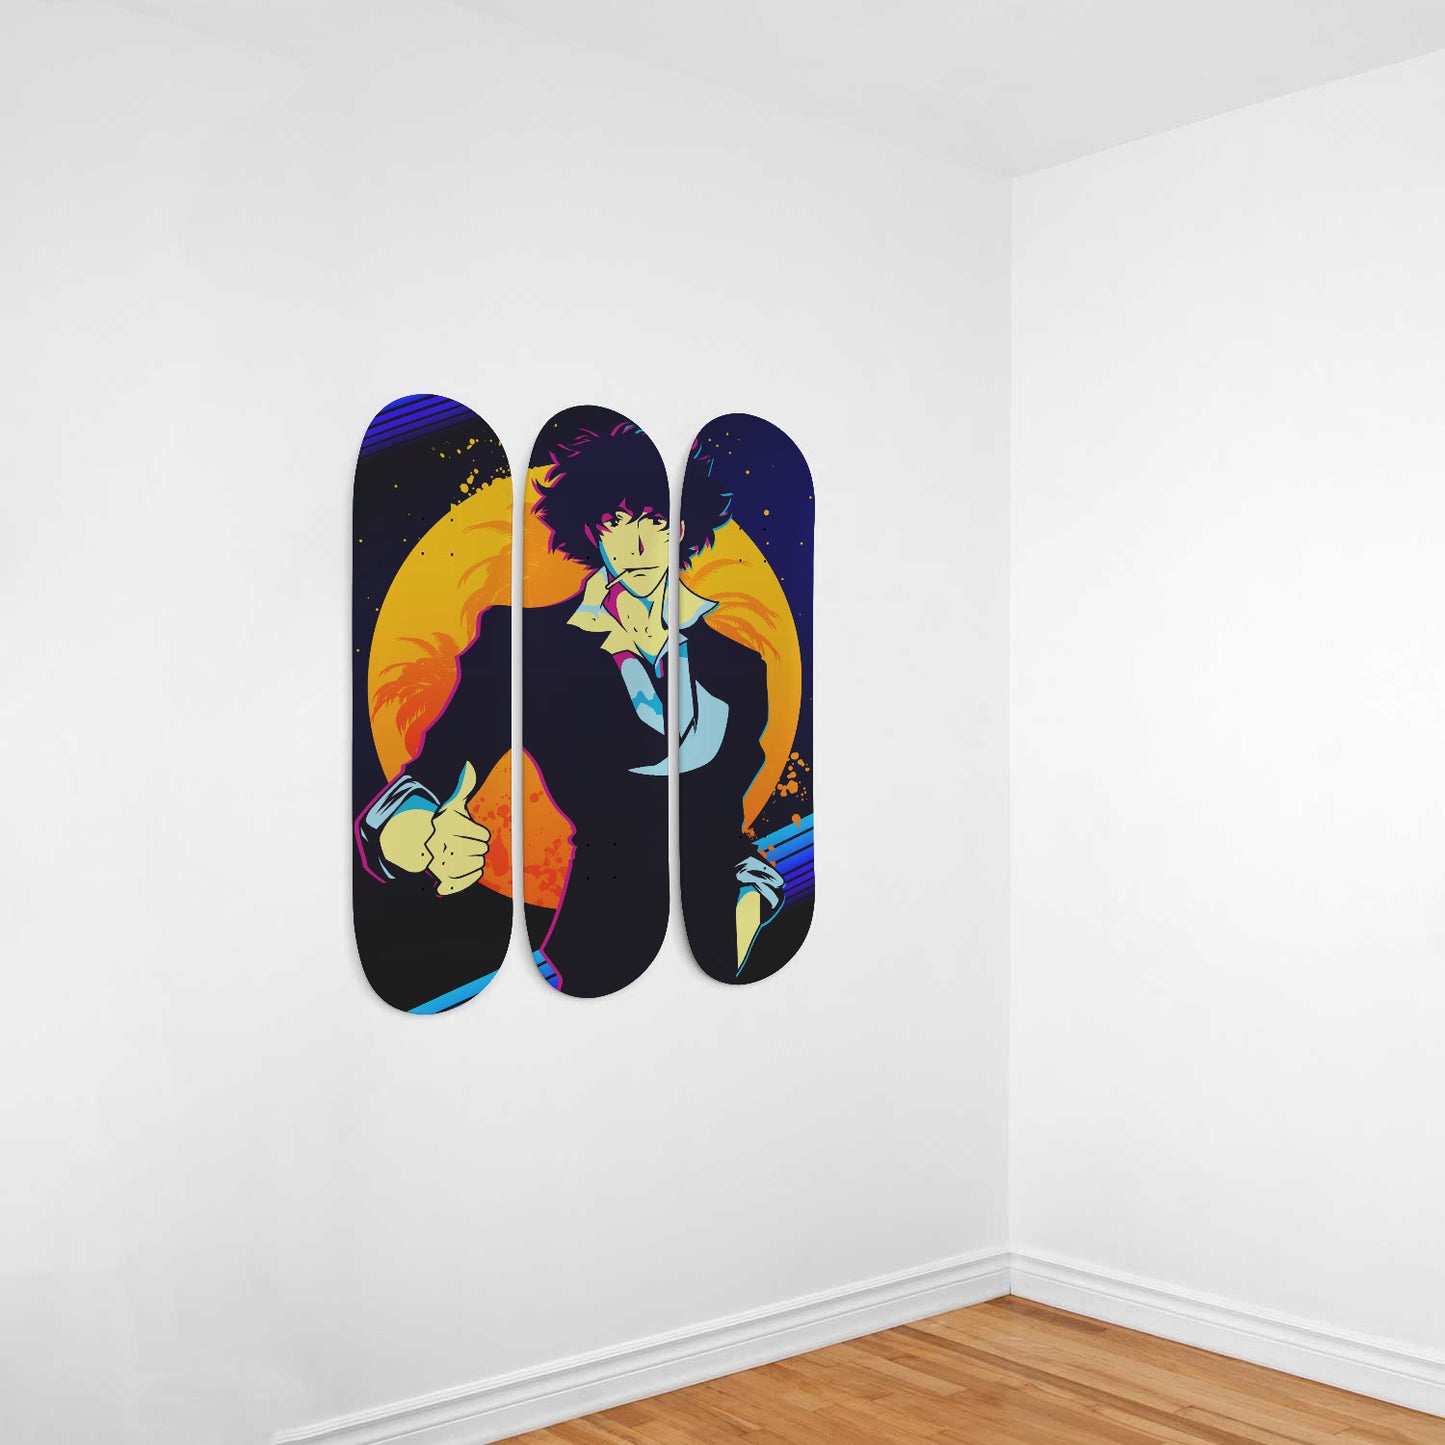 Spike Spiegel and the Moon  | Wall Art -Cowboy Bebop Inspired | Japanese Neo Noir Science Fiction Anime Inspired | 3 Piece Skateboard Wall Art, Deck Art | Wall Hanging Decor | Custom Painted Wall Art